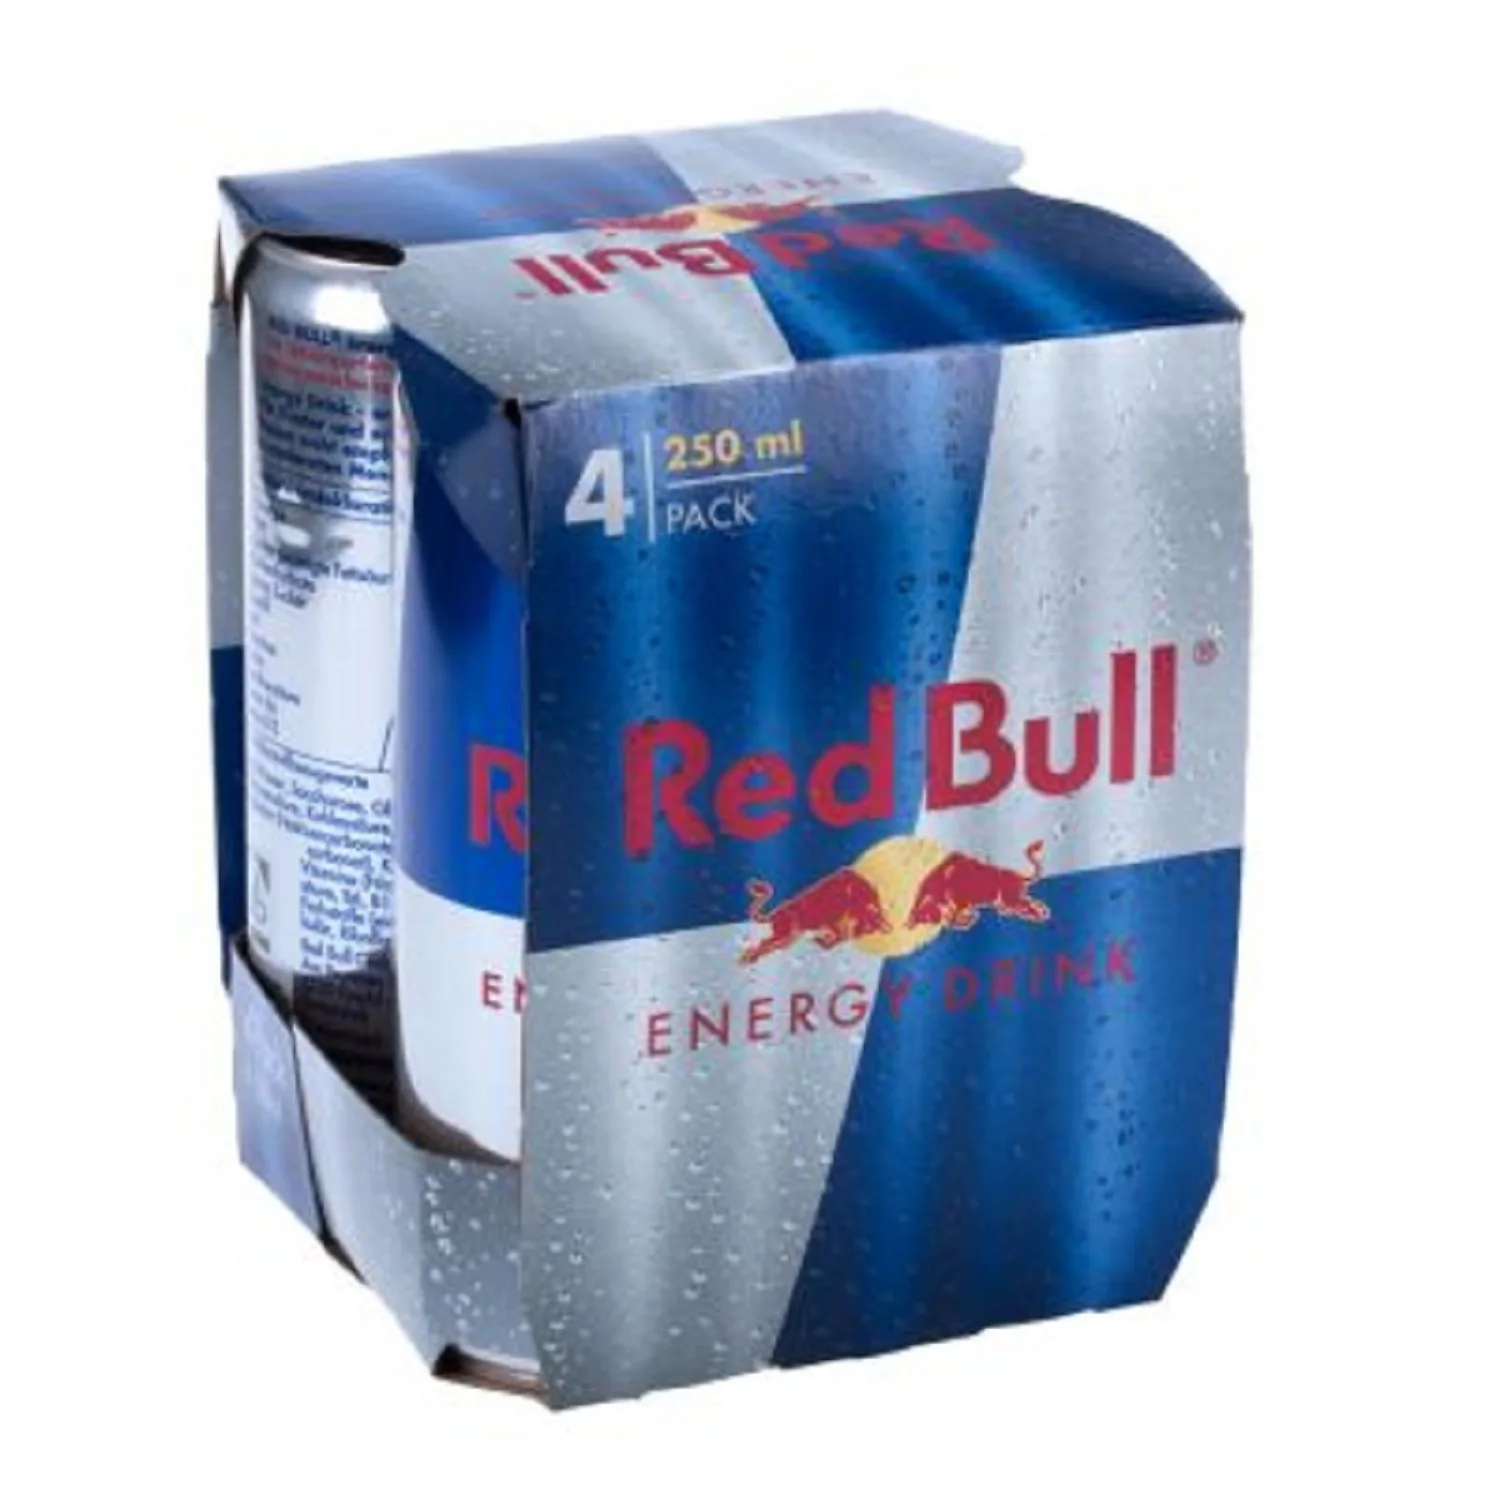 Wholesale price ORIGINAL Red Bull 250 ml Energy Drink